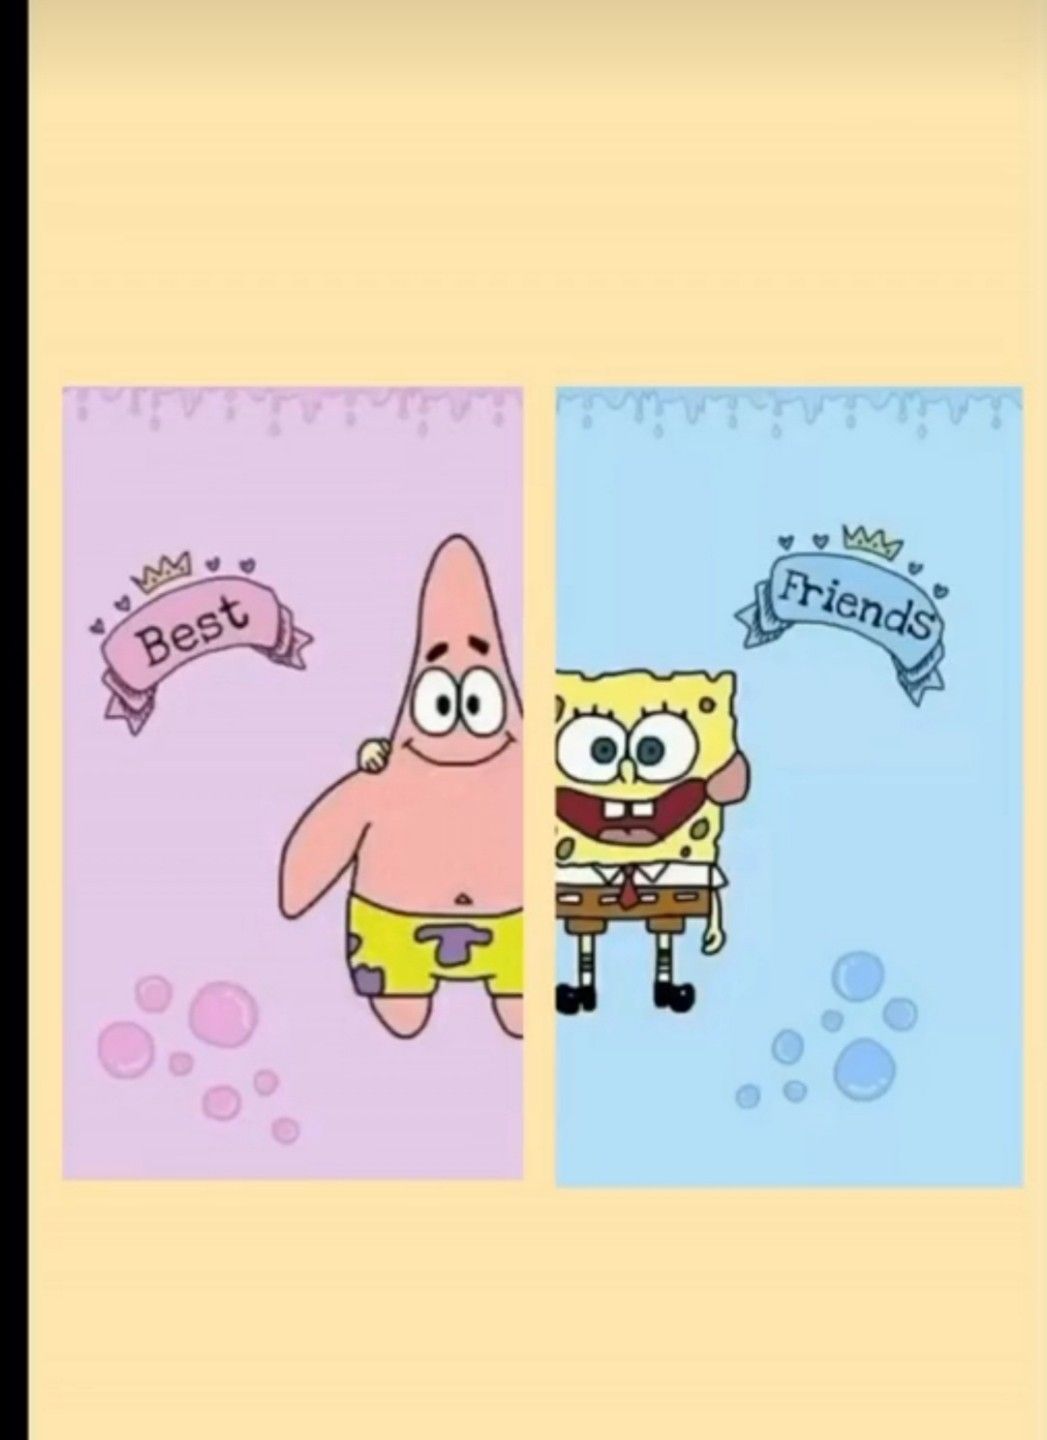 spongebob friendschip wallpaper. Best friend wallpaper, Friends wallpaper, Best friends cartoon